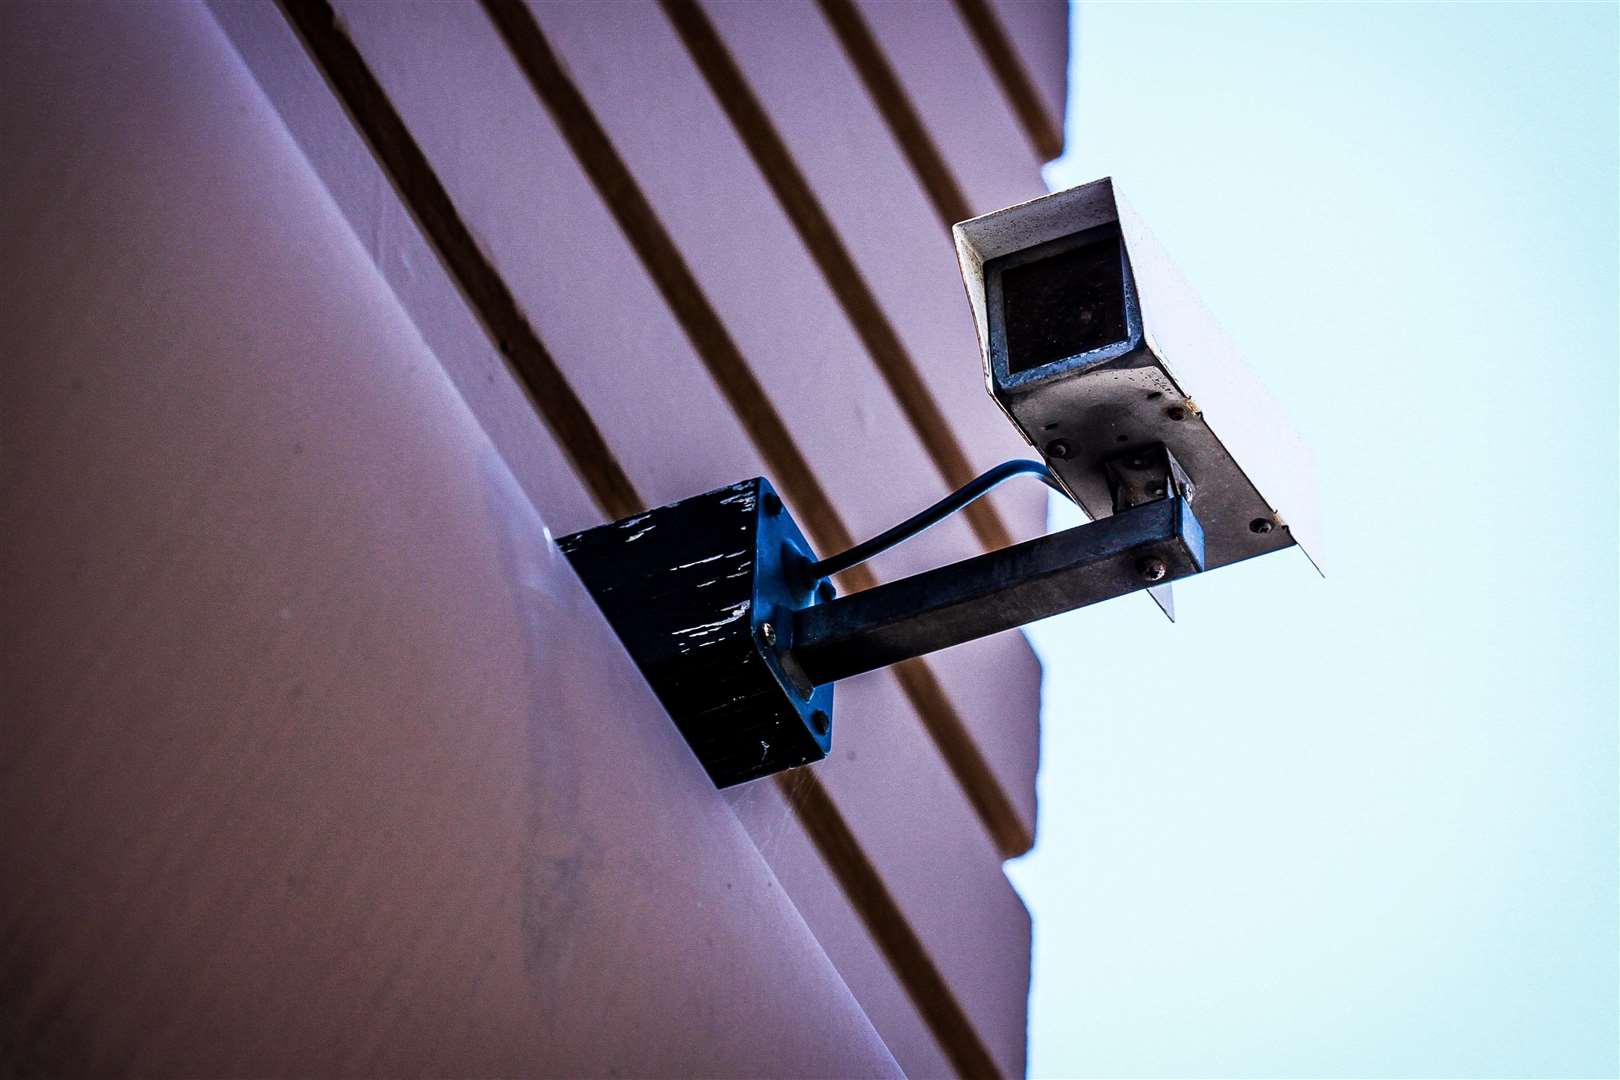 MCG maintains Medway's CCTV cameras